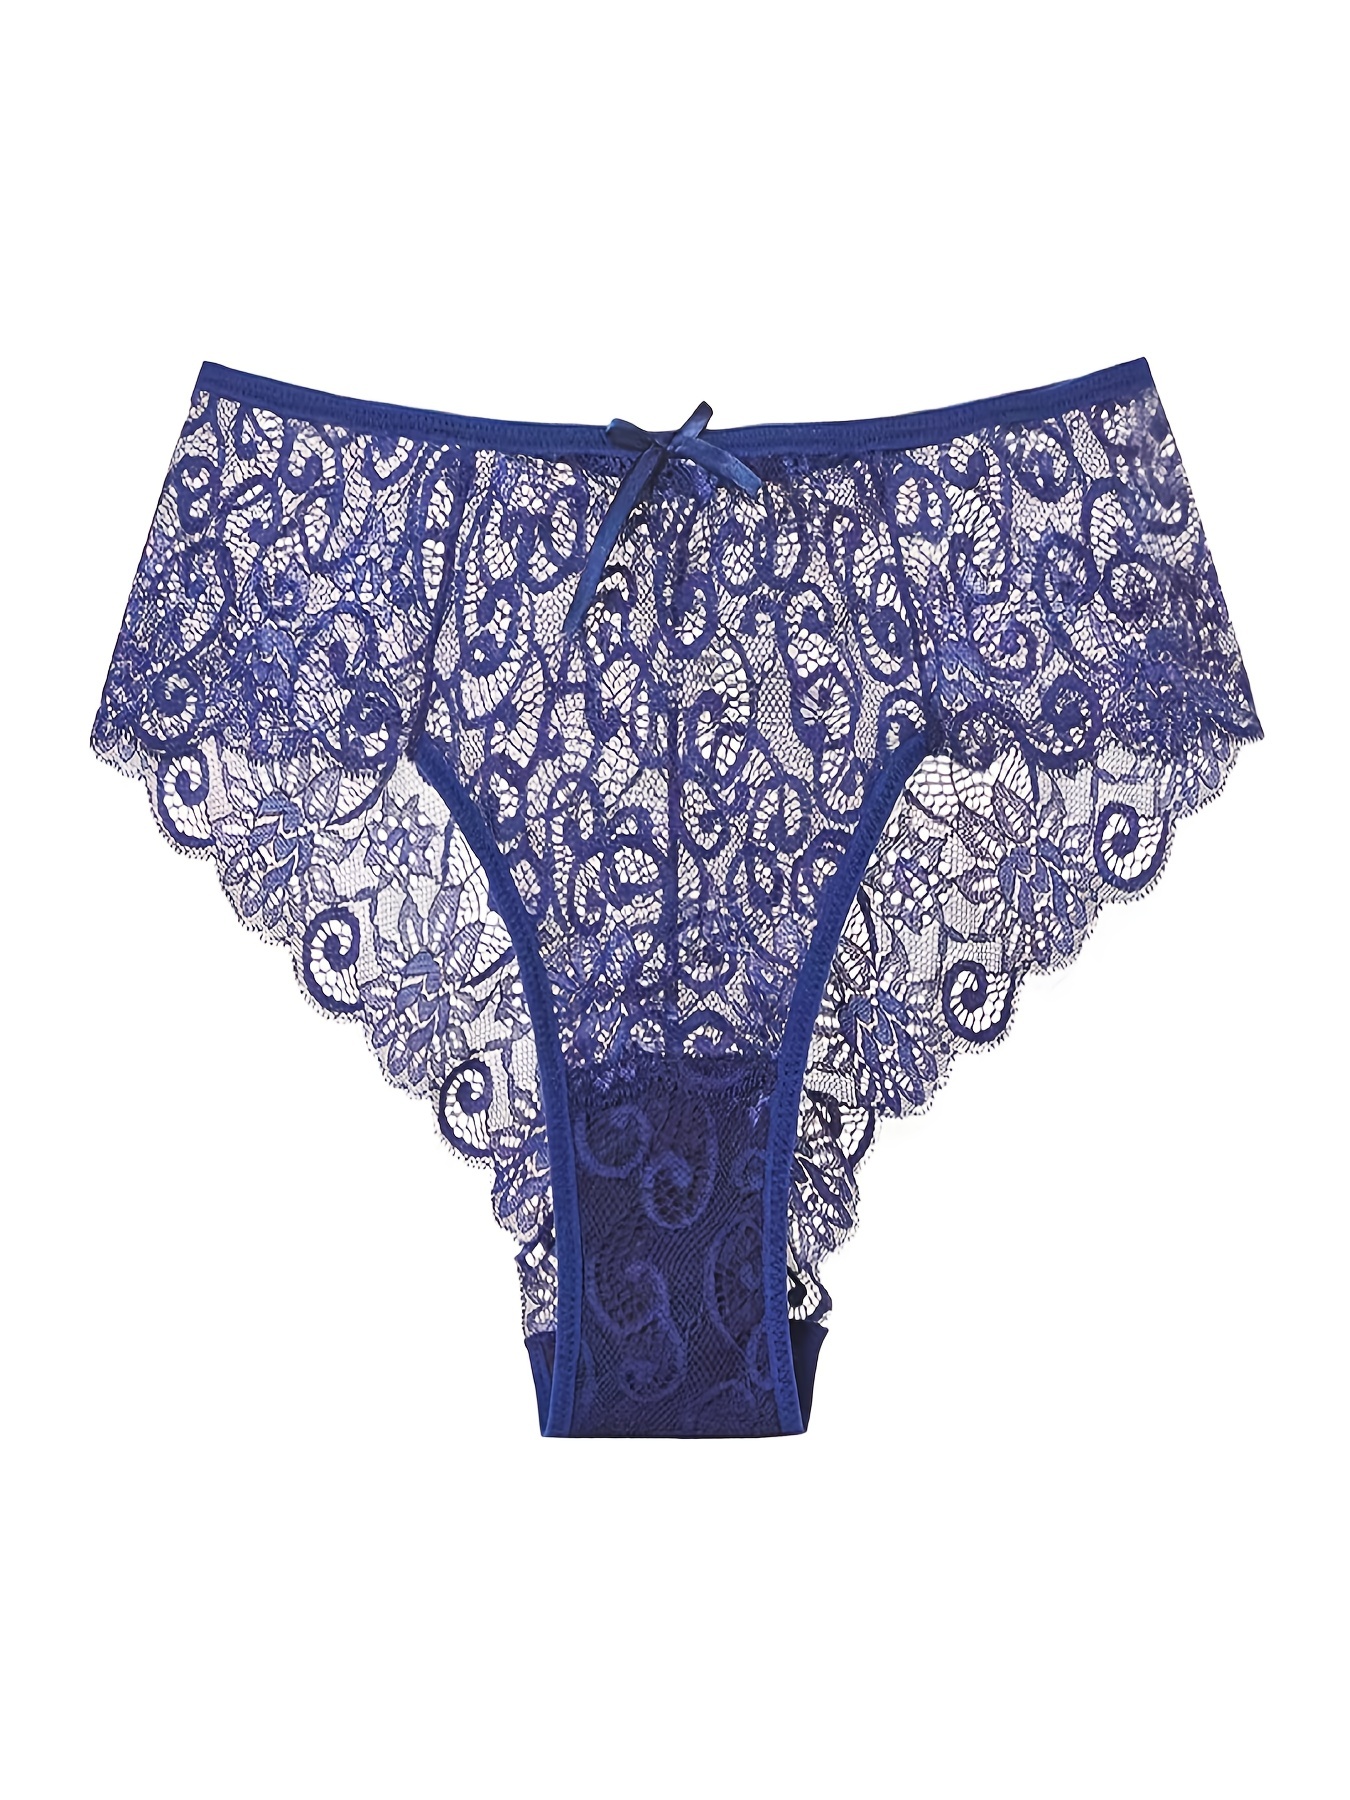 Seamless Panties Women Thong Women Lace Panties Thong Women *2* (Color :  Navy Blue, Size : Small)